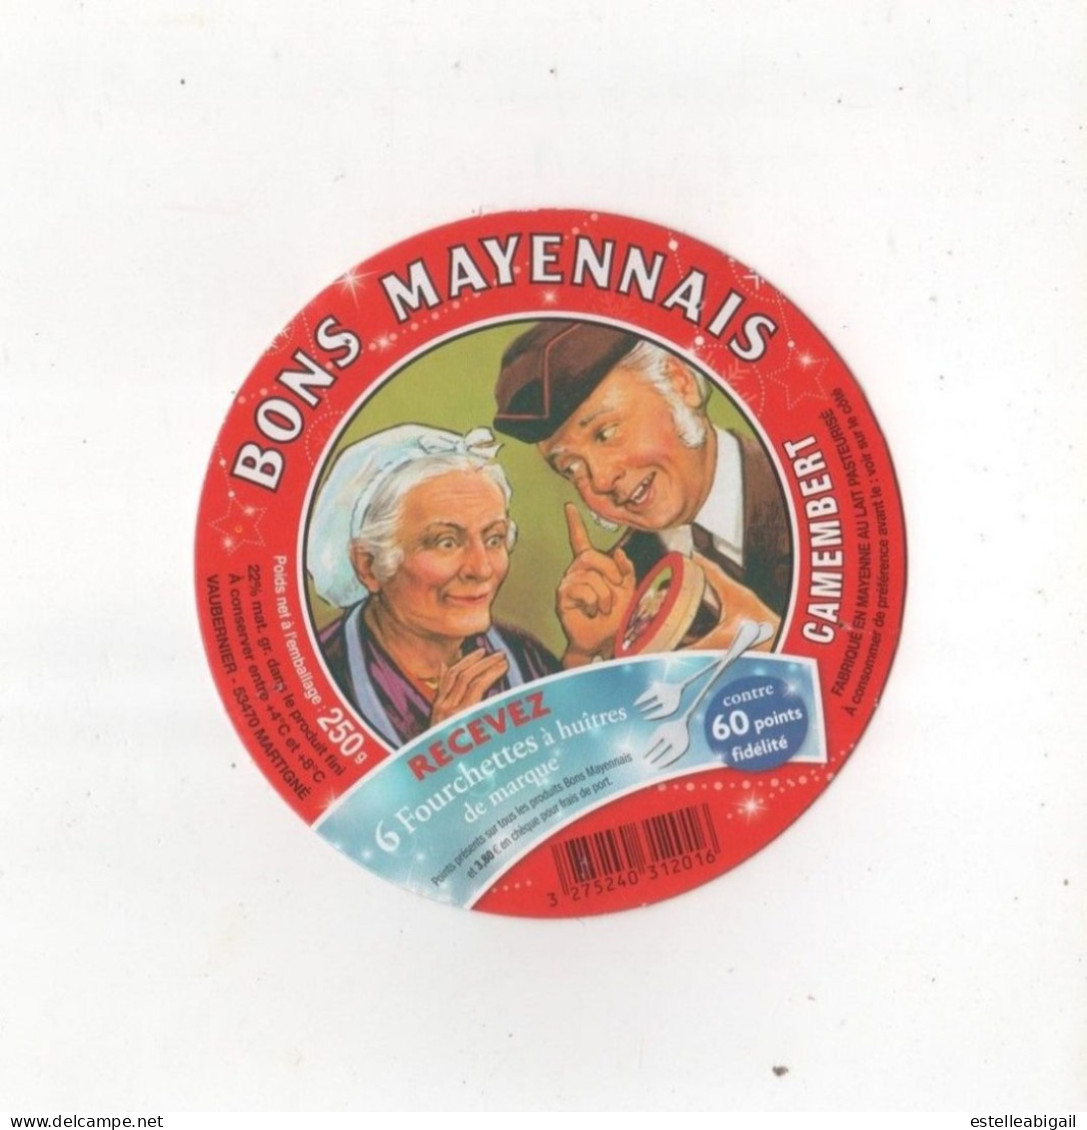 Bons Mayennais - Cheese